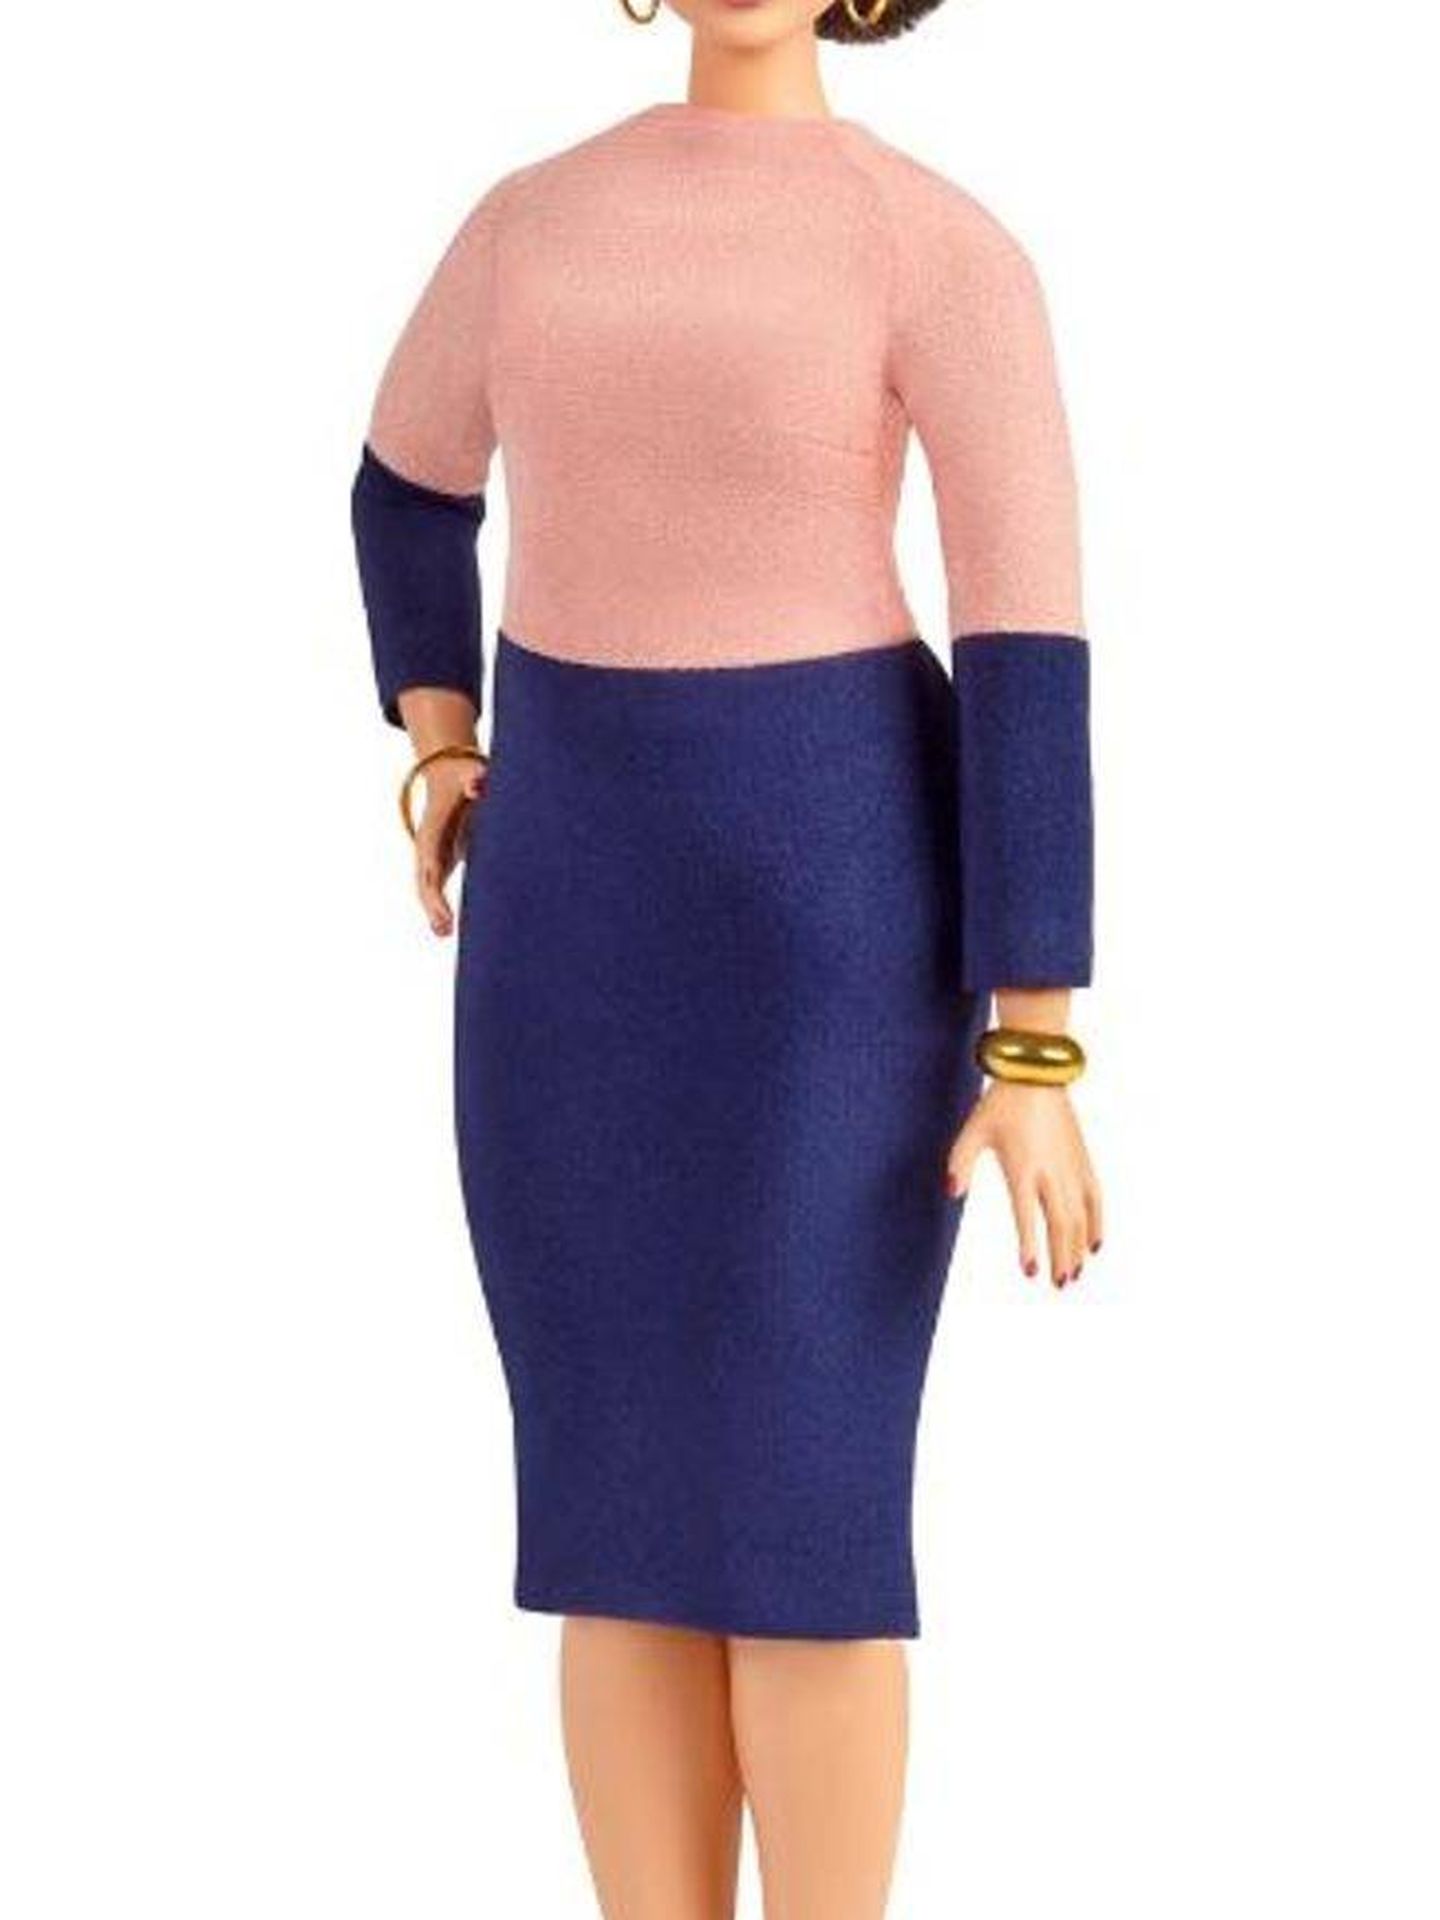 Barbie inspirada en Vicky Martín Berrocal.